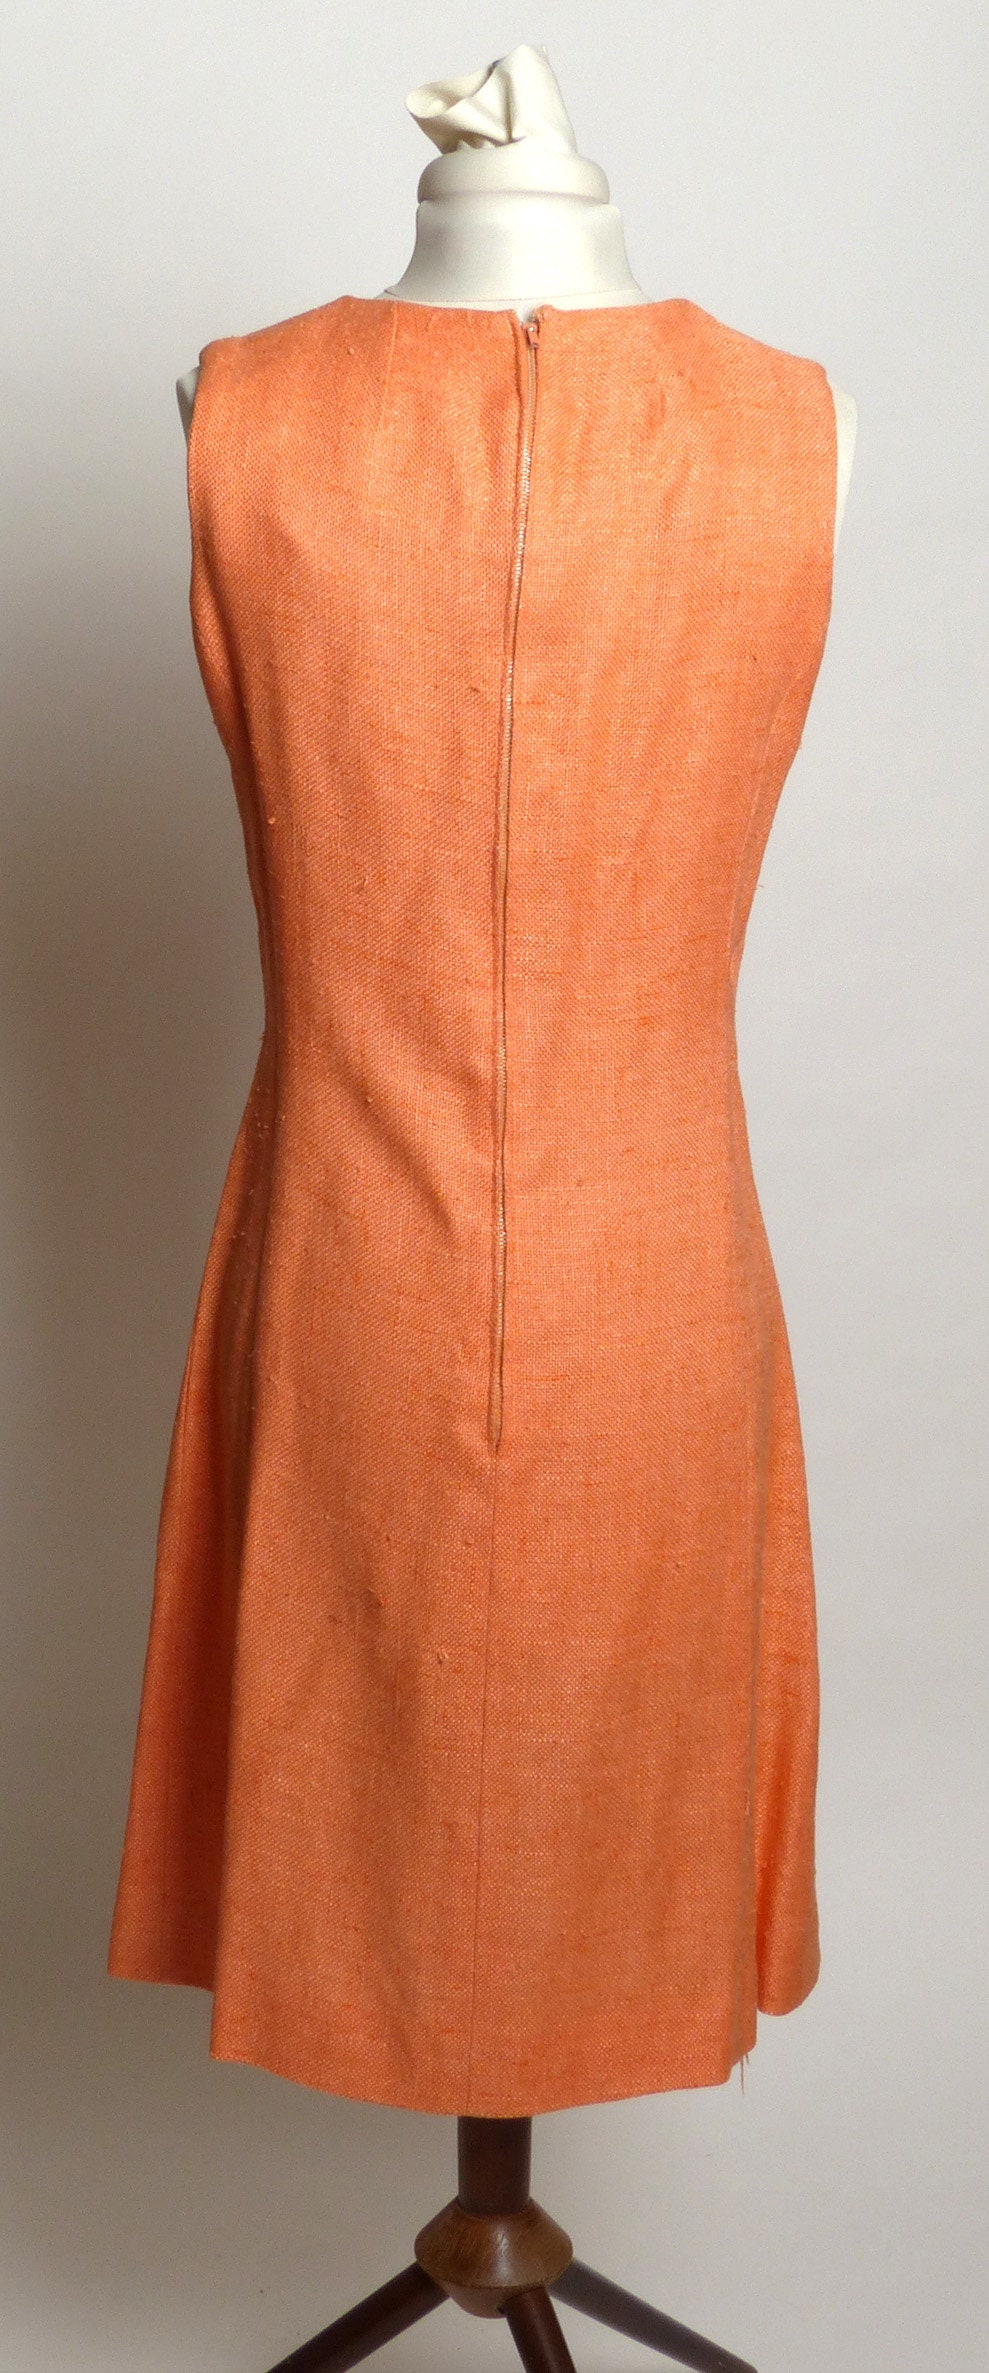 Circa 1960s Alison Ayers Peach Barkcloth Dress - Etsy